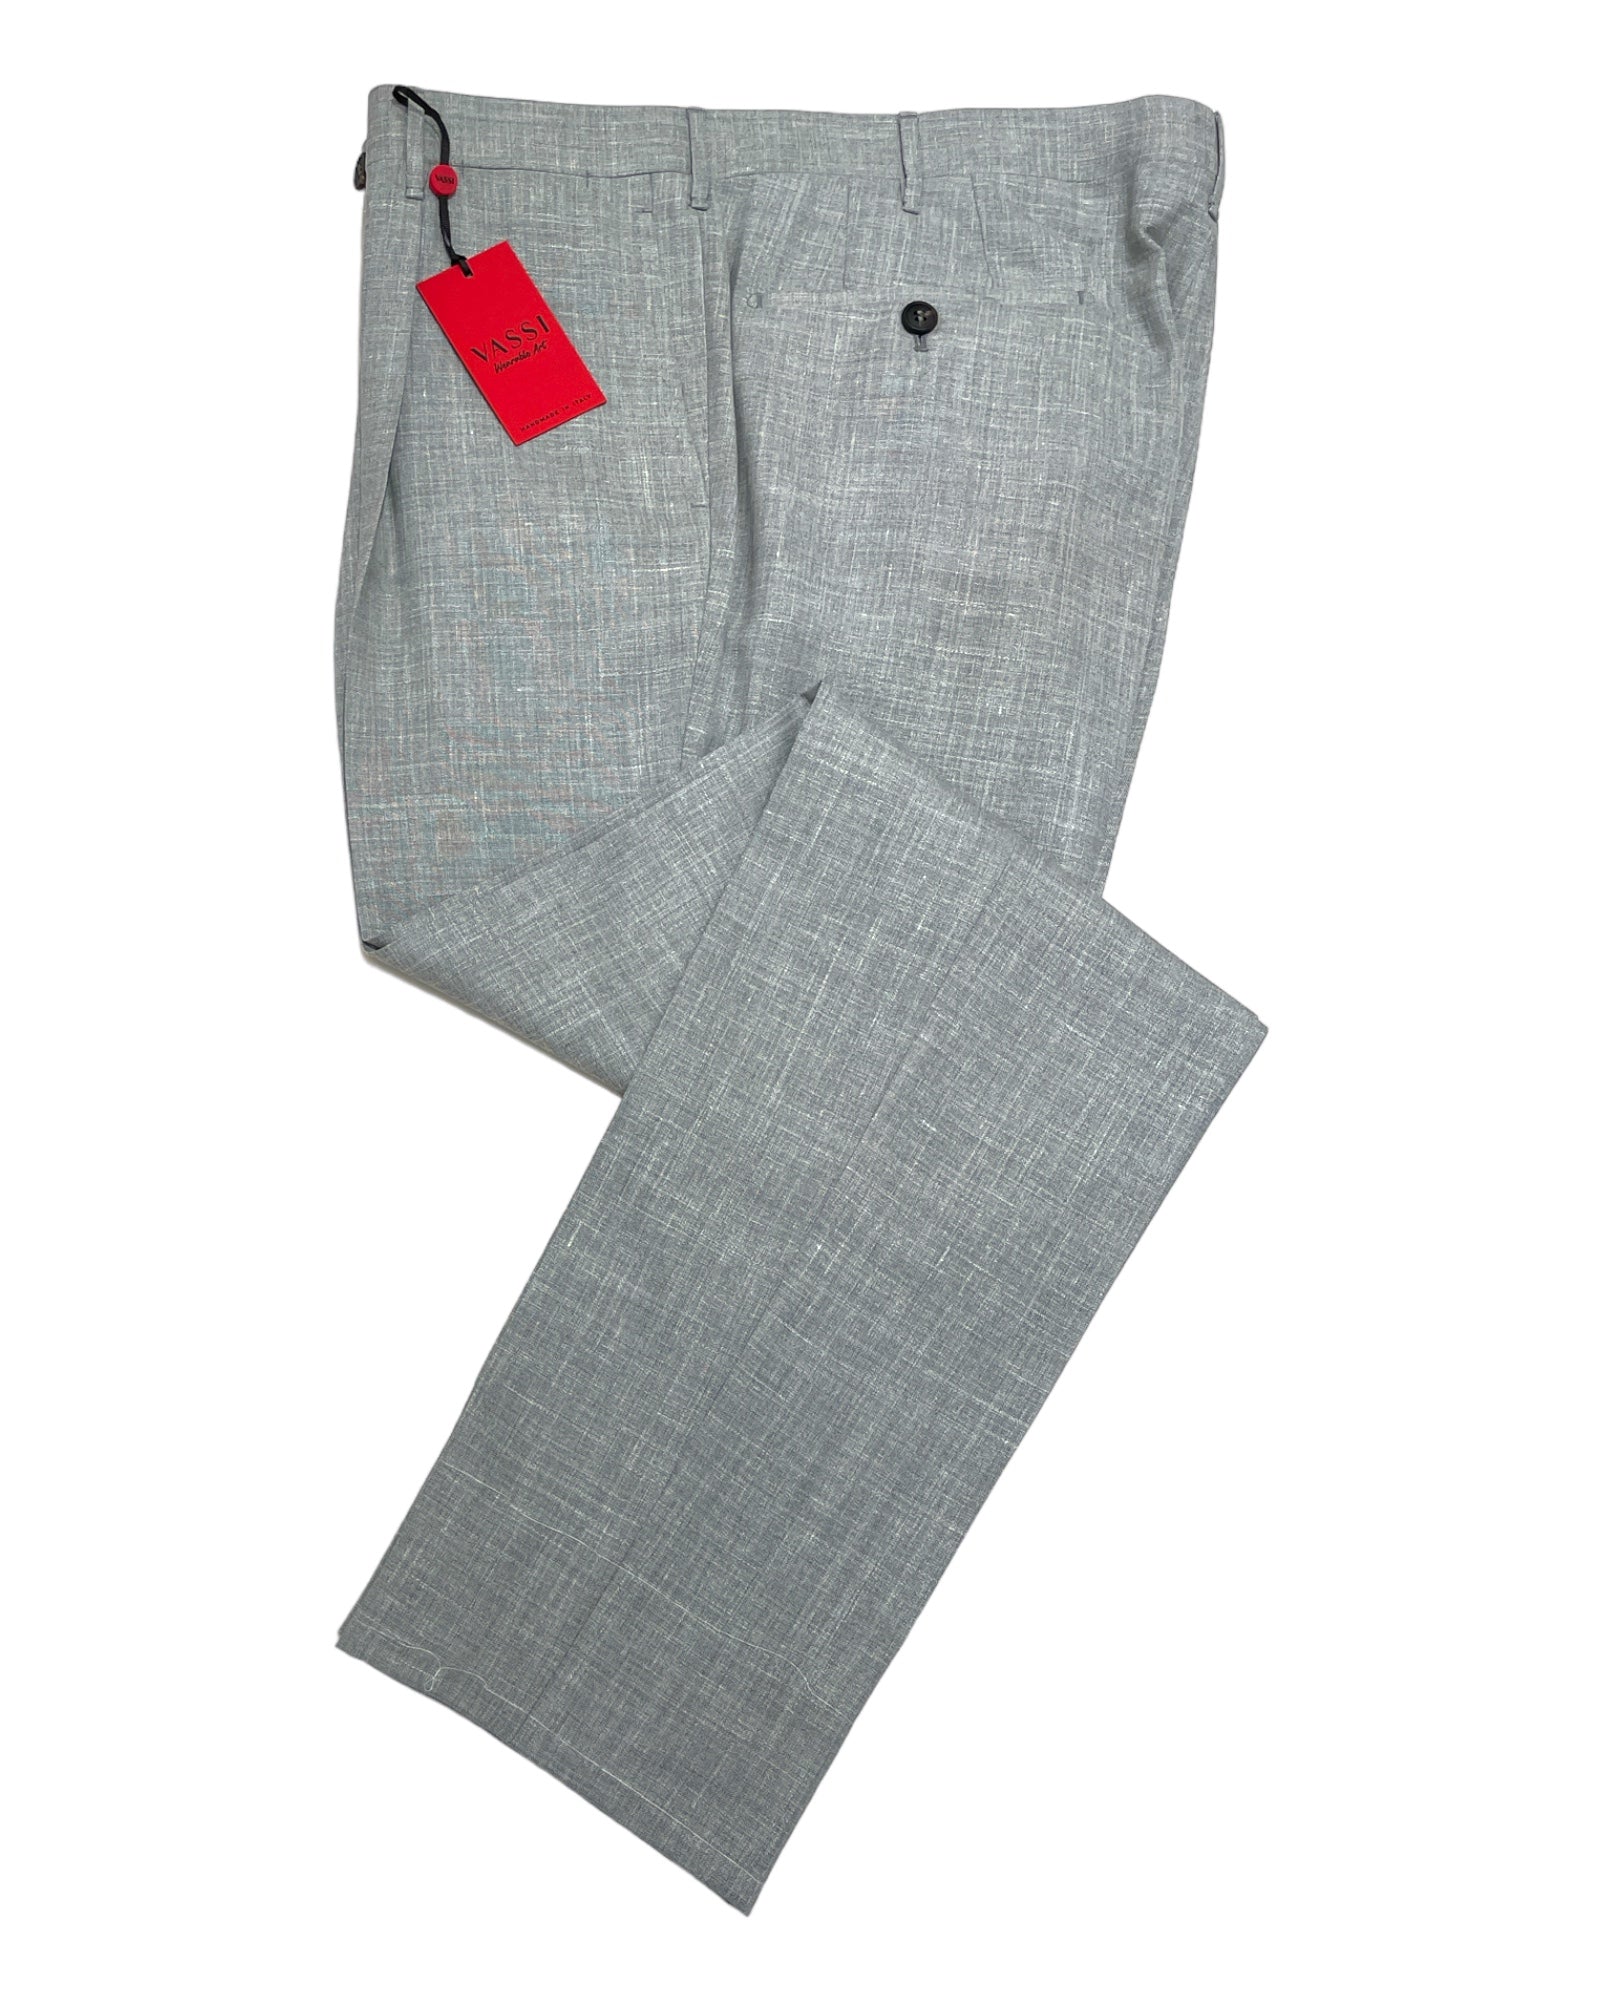 VASSI One Pleated Sartorial Trousers - Light Grey Loro Piana wool silk linen DRESS PANTS48 EU